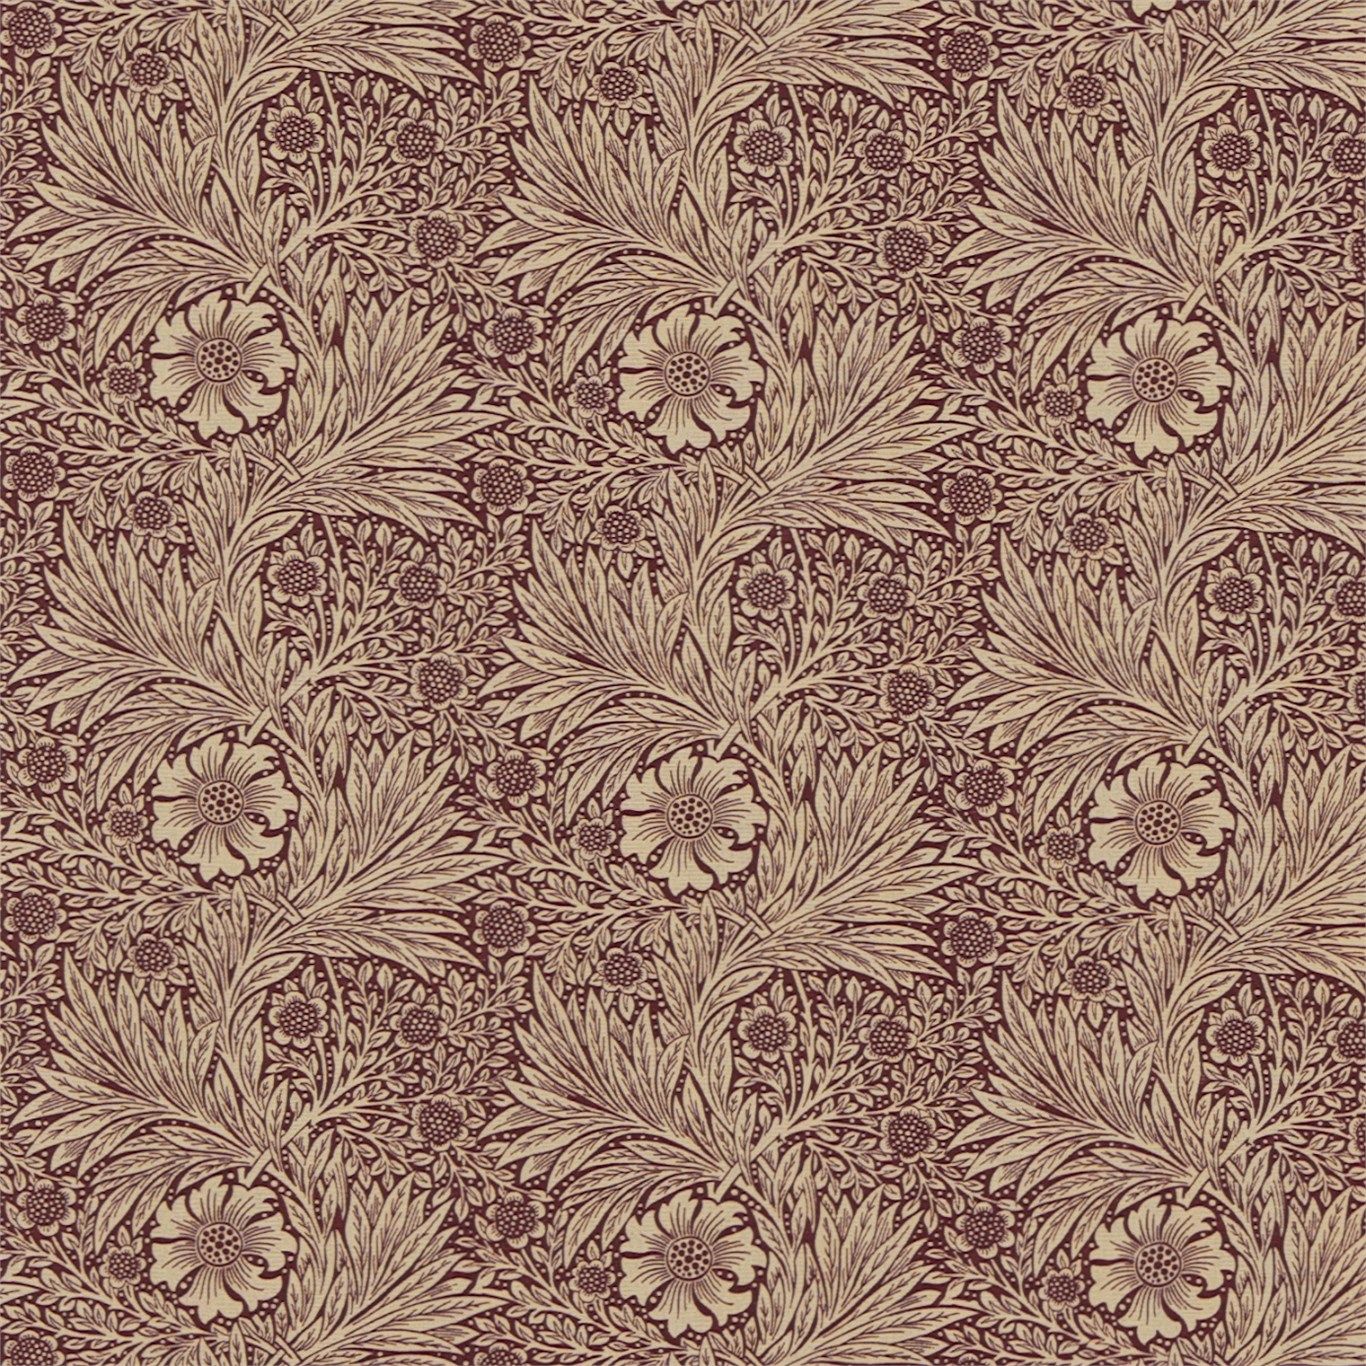 fabric wallpaper uk,pattern,wallpaper,design,textile,floral design